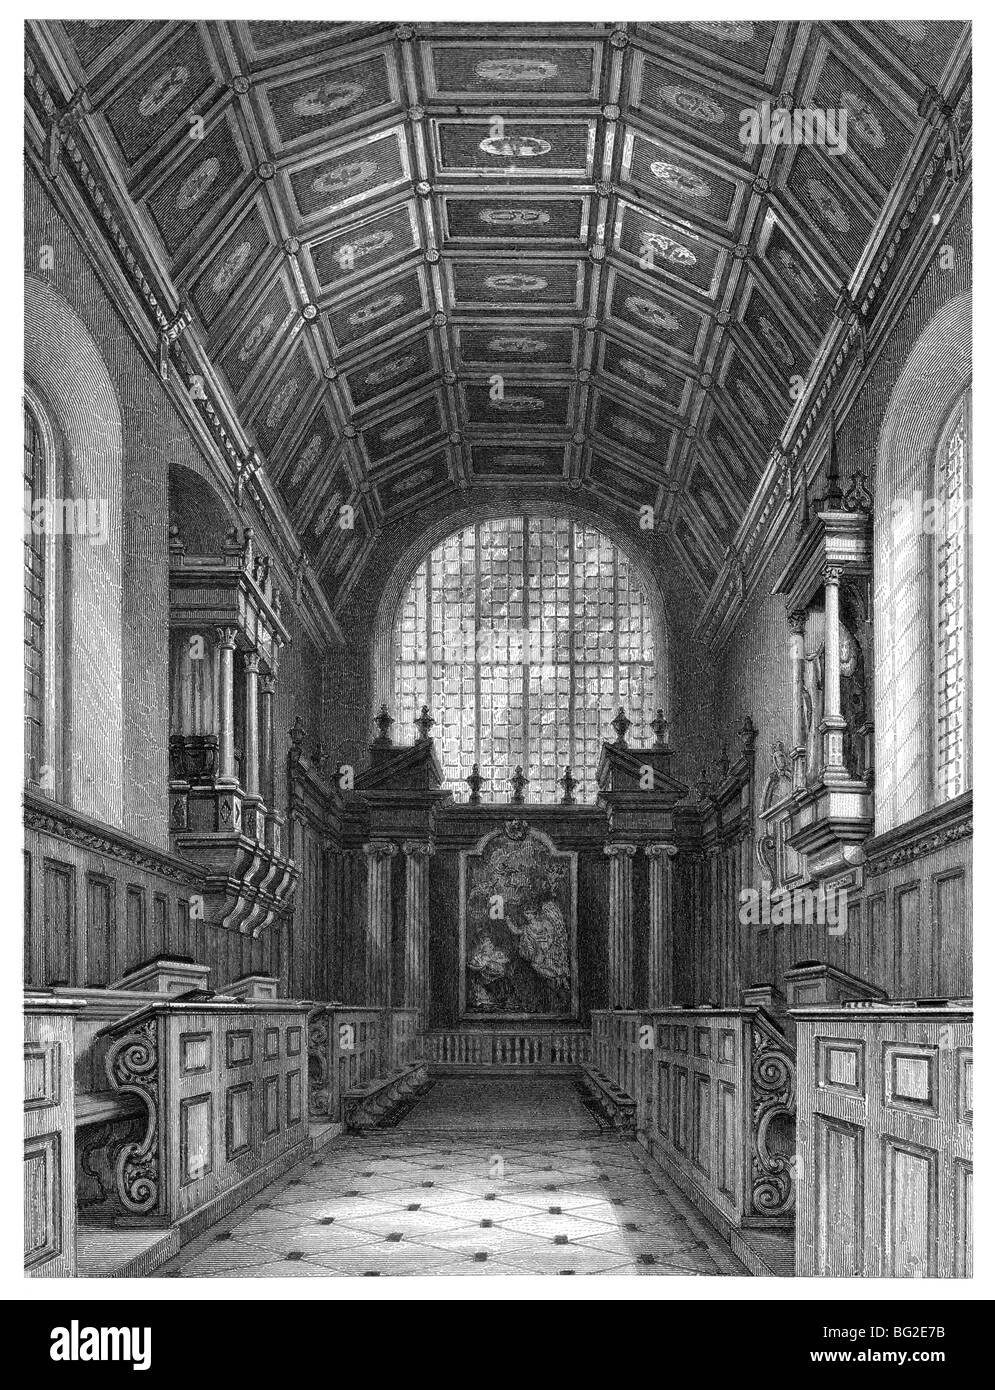 Gonville und Caius College in Cambridge - Innenraum der Kapelle Stockfoto